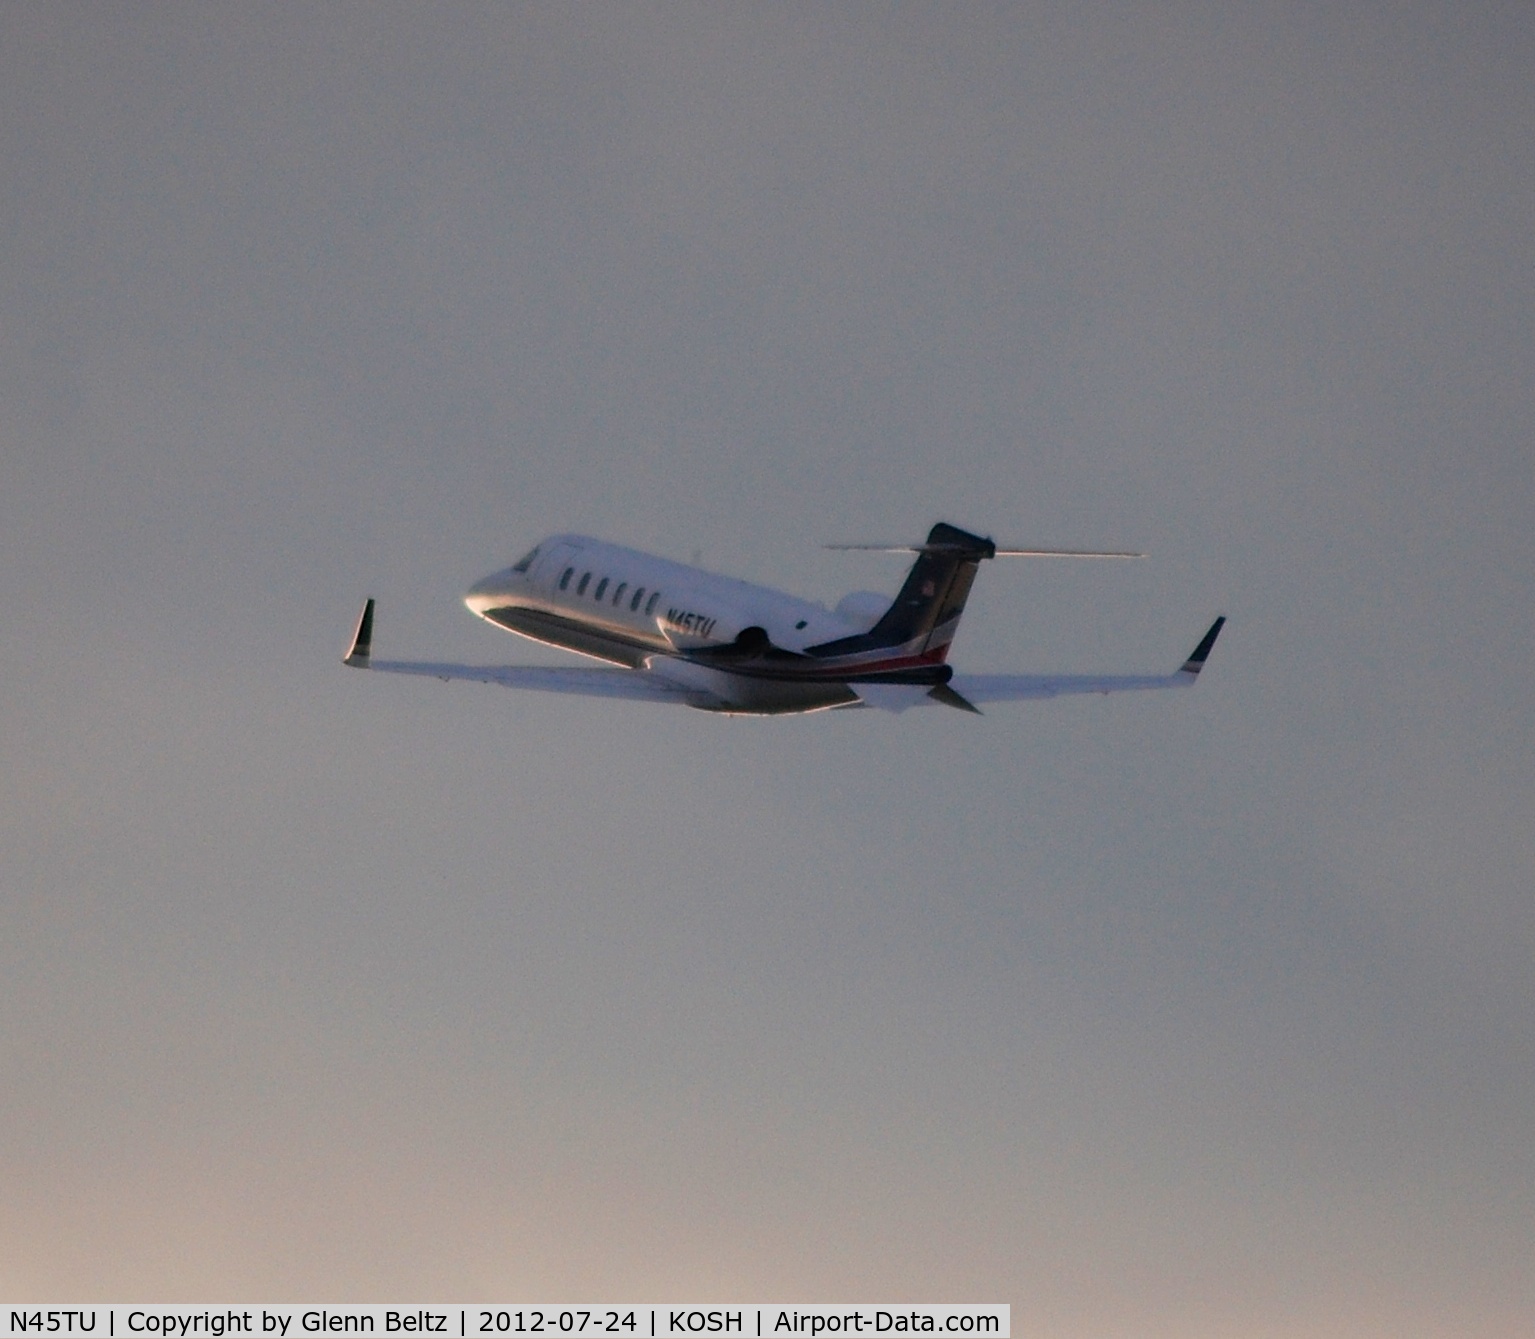 N45TU, 2000 Learjet 45 C/N 120, Departing EAA Airventure/Oshkosh on 24 July 2012